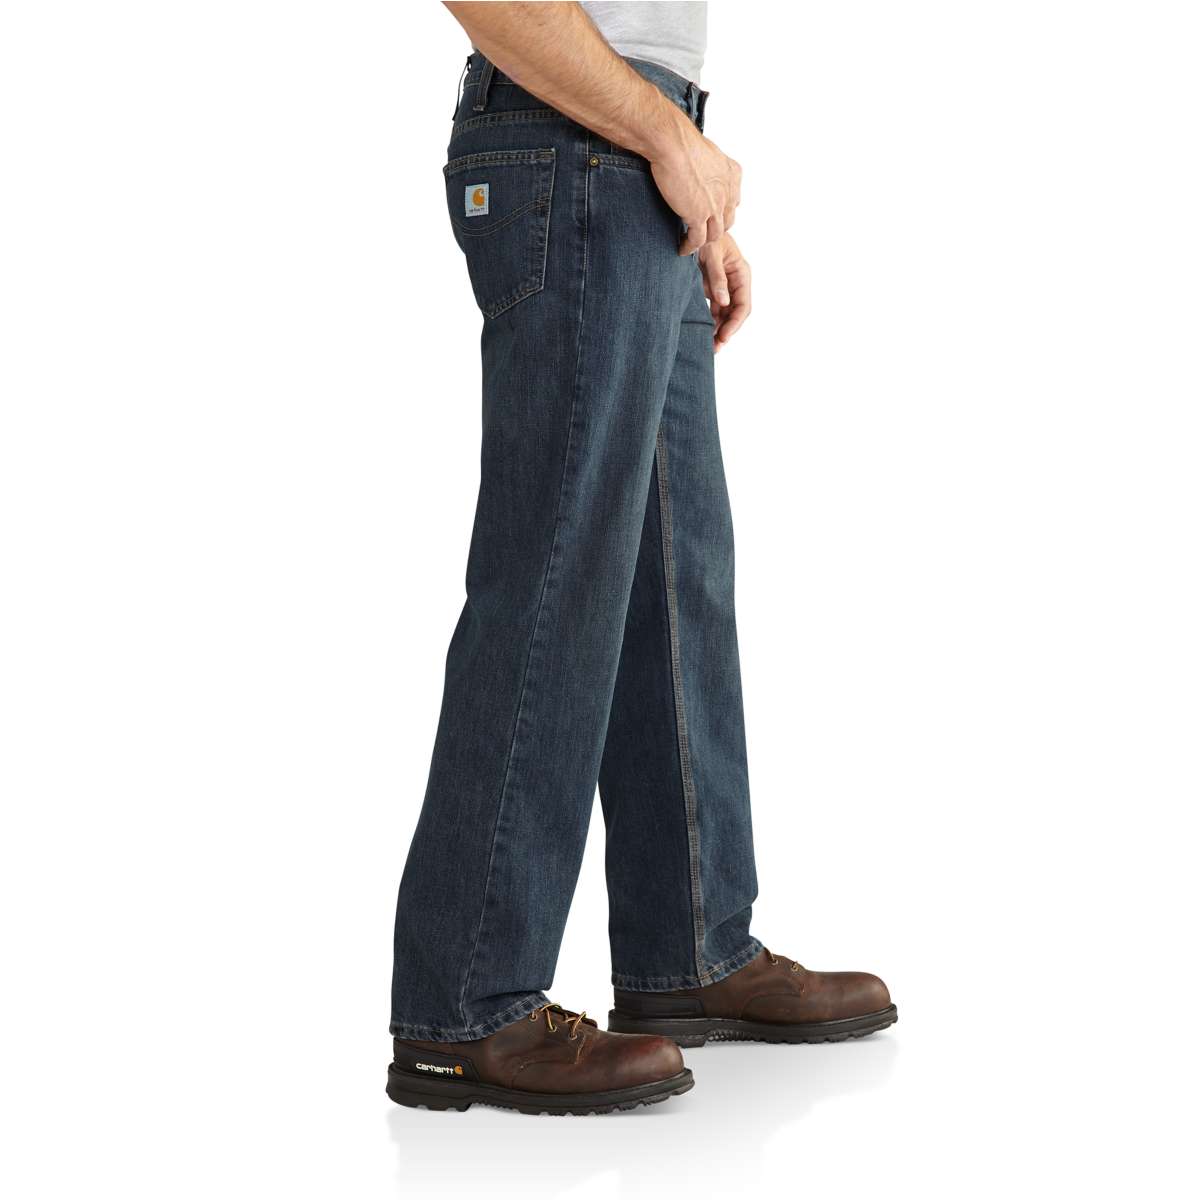 101483 - Carhartt Men's Relaxed Fit 5 Pocket Jean